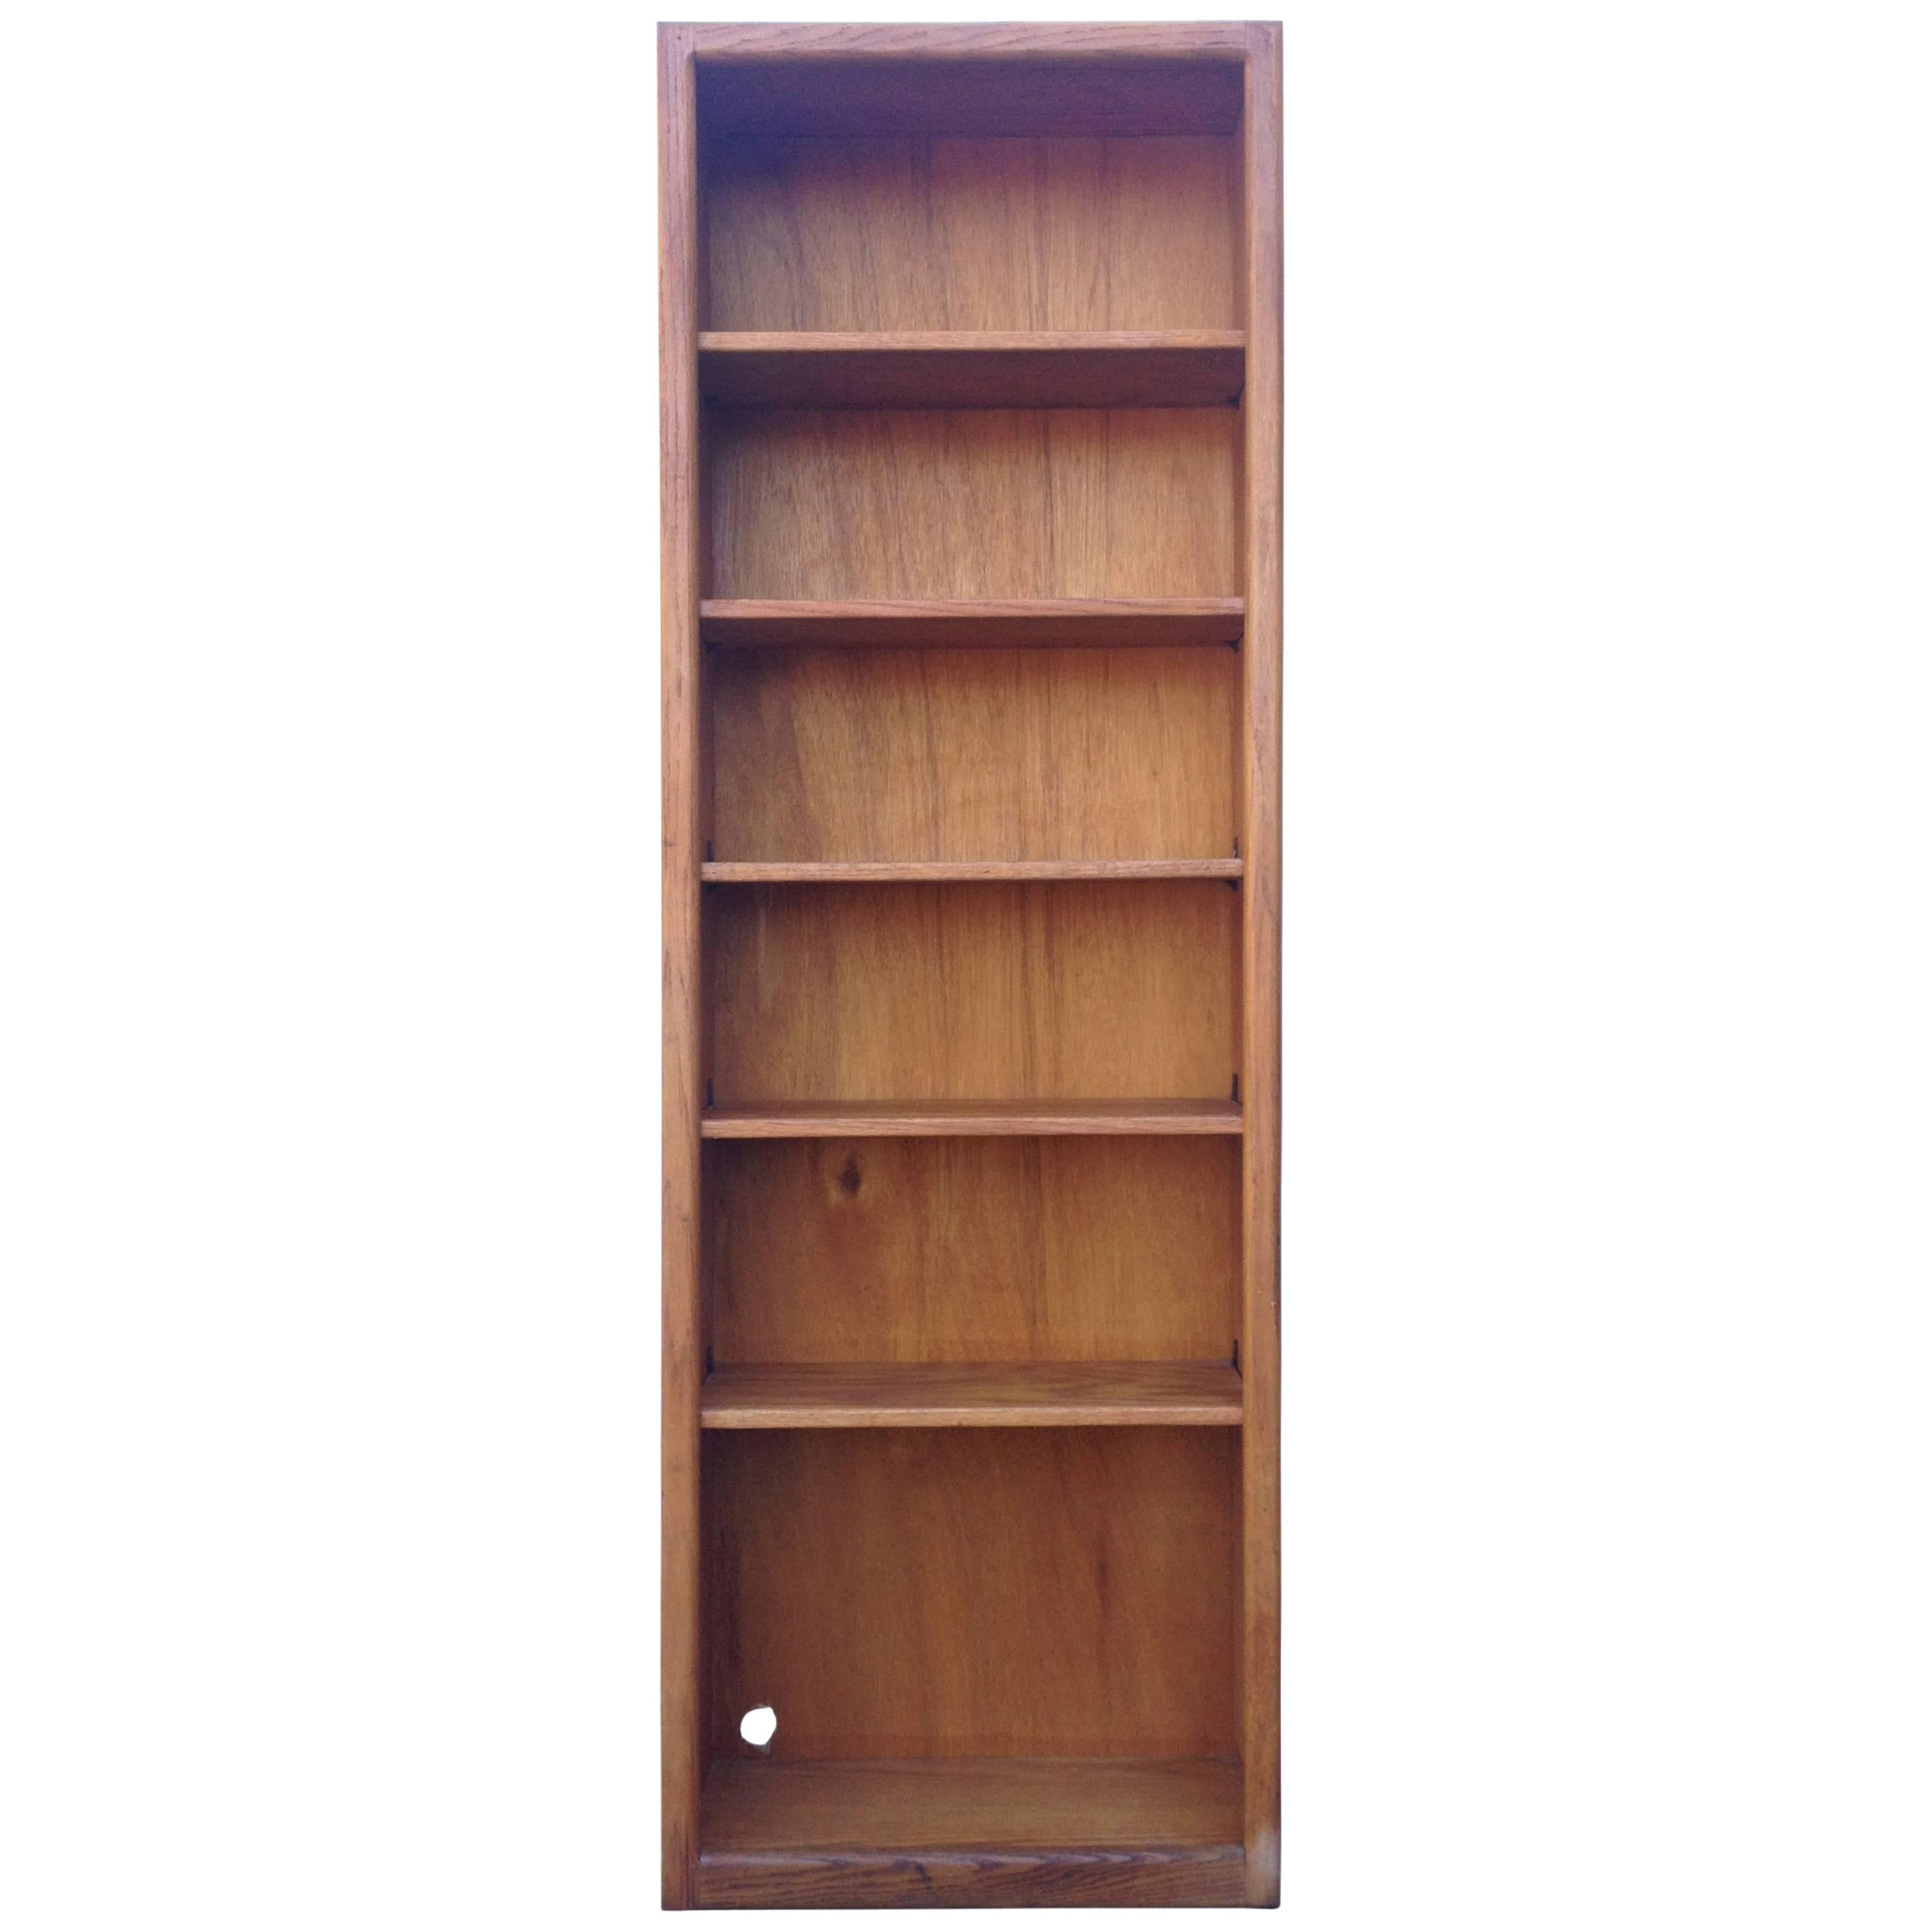 Tall and Narrow Gerald McCabe Bookshelf